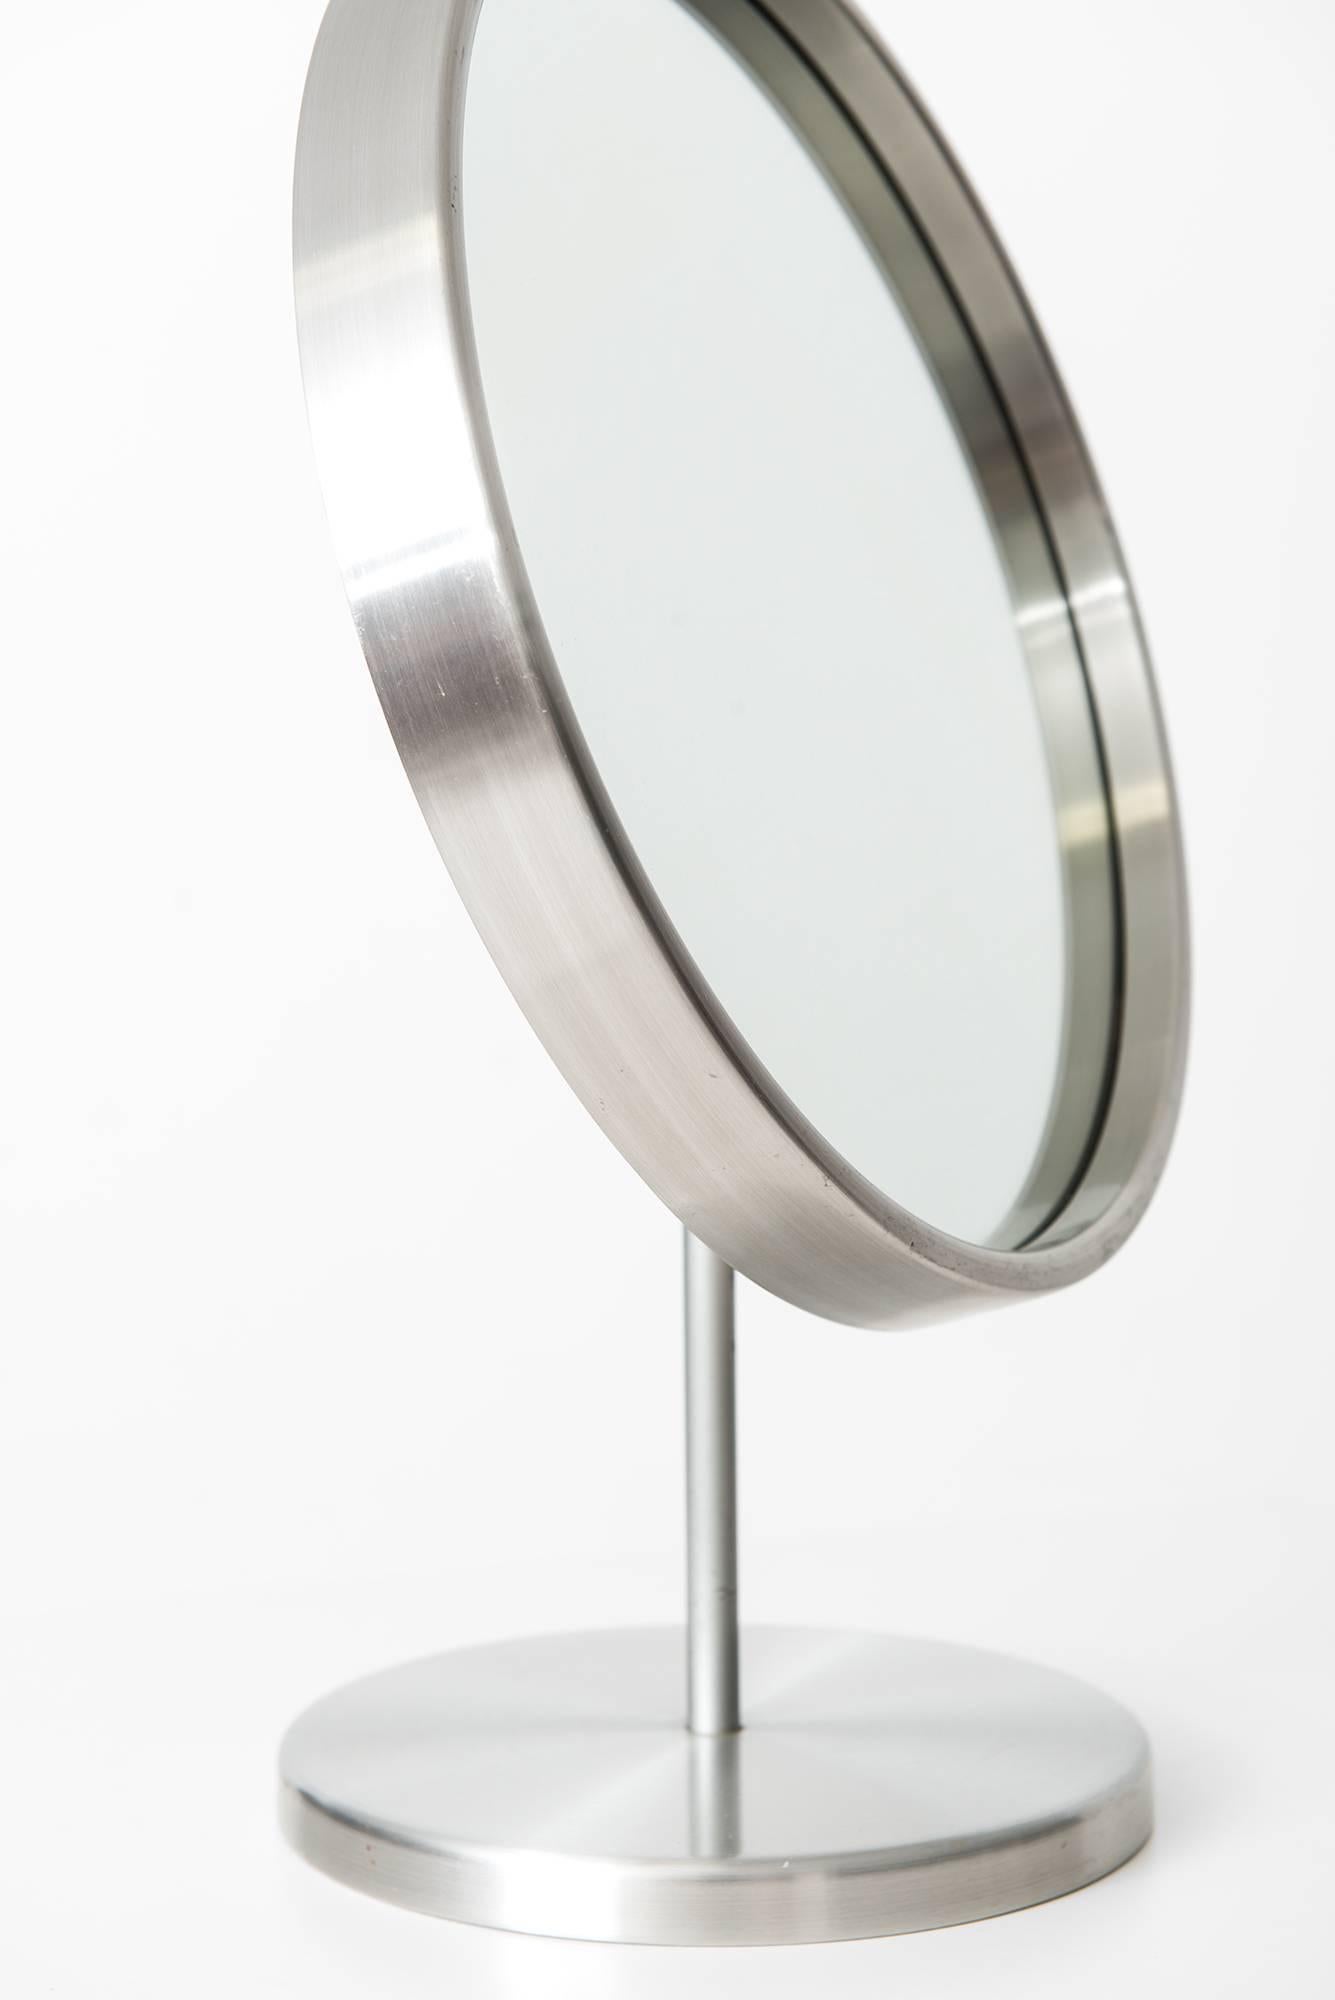 Rare table mirror in aluminium. Produced by Glas mäster in Markaryd, Sweden.